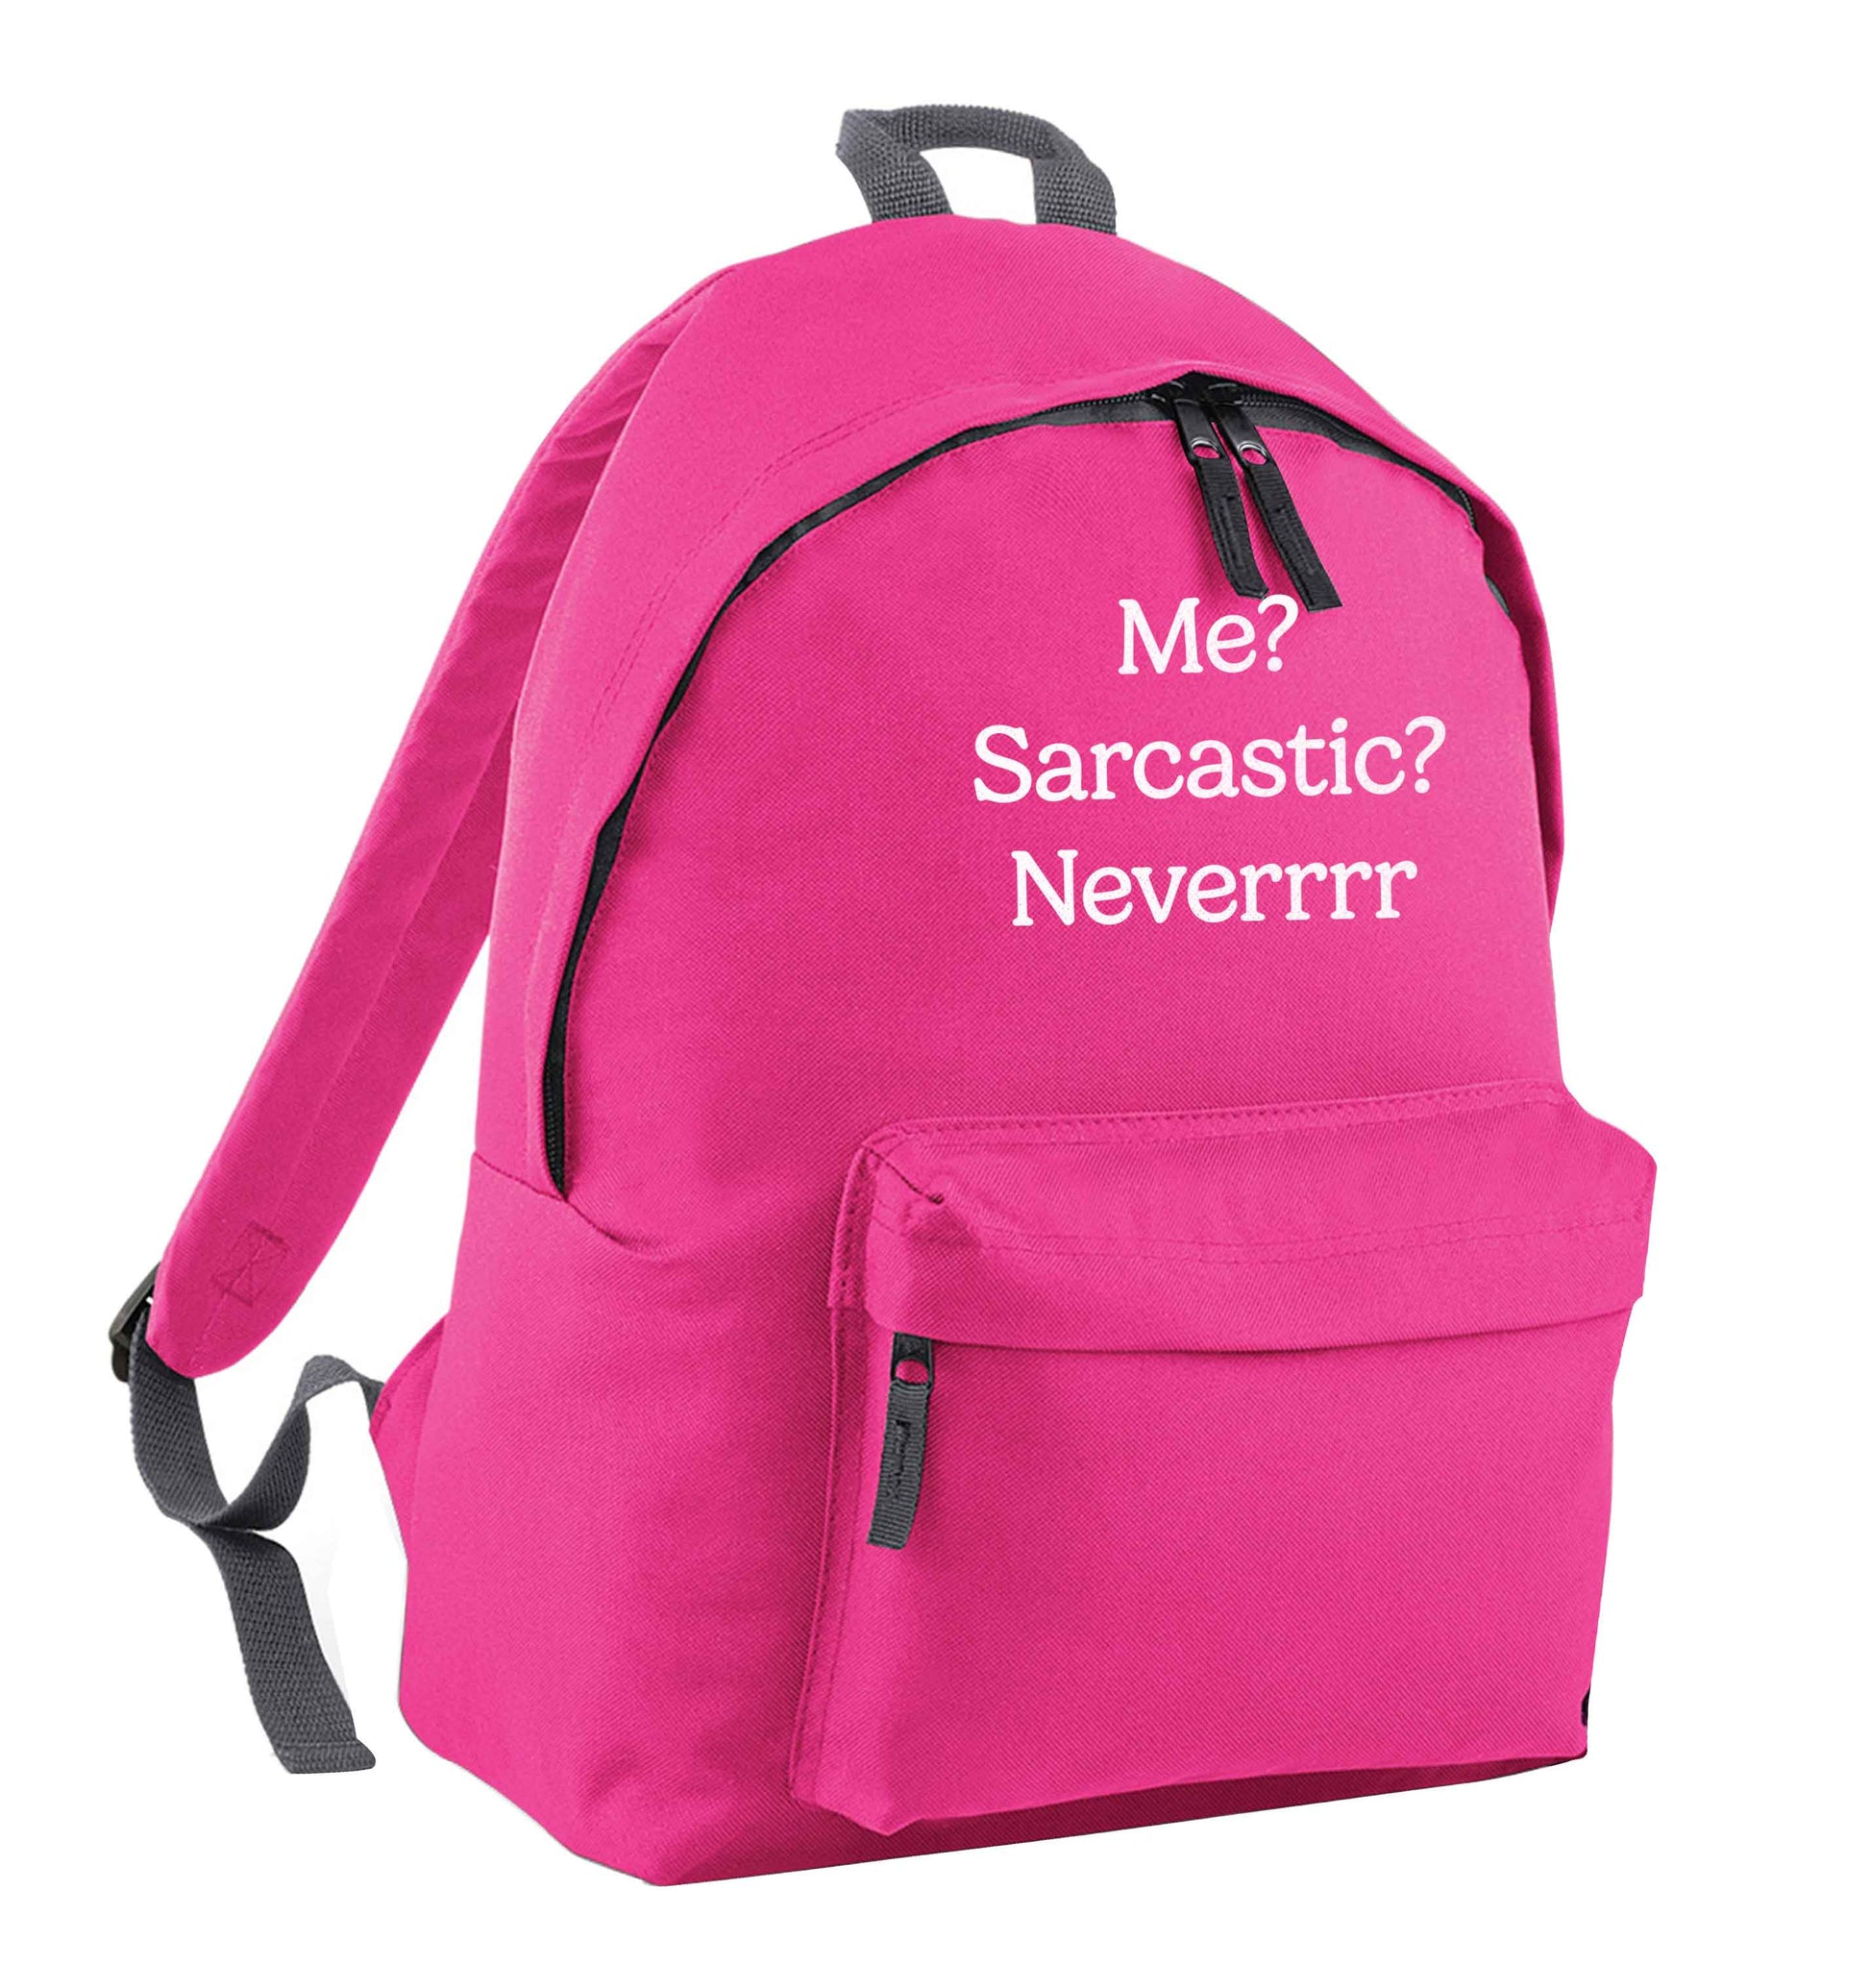 Me? sarcastic? never pink children's backpack